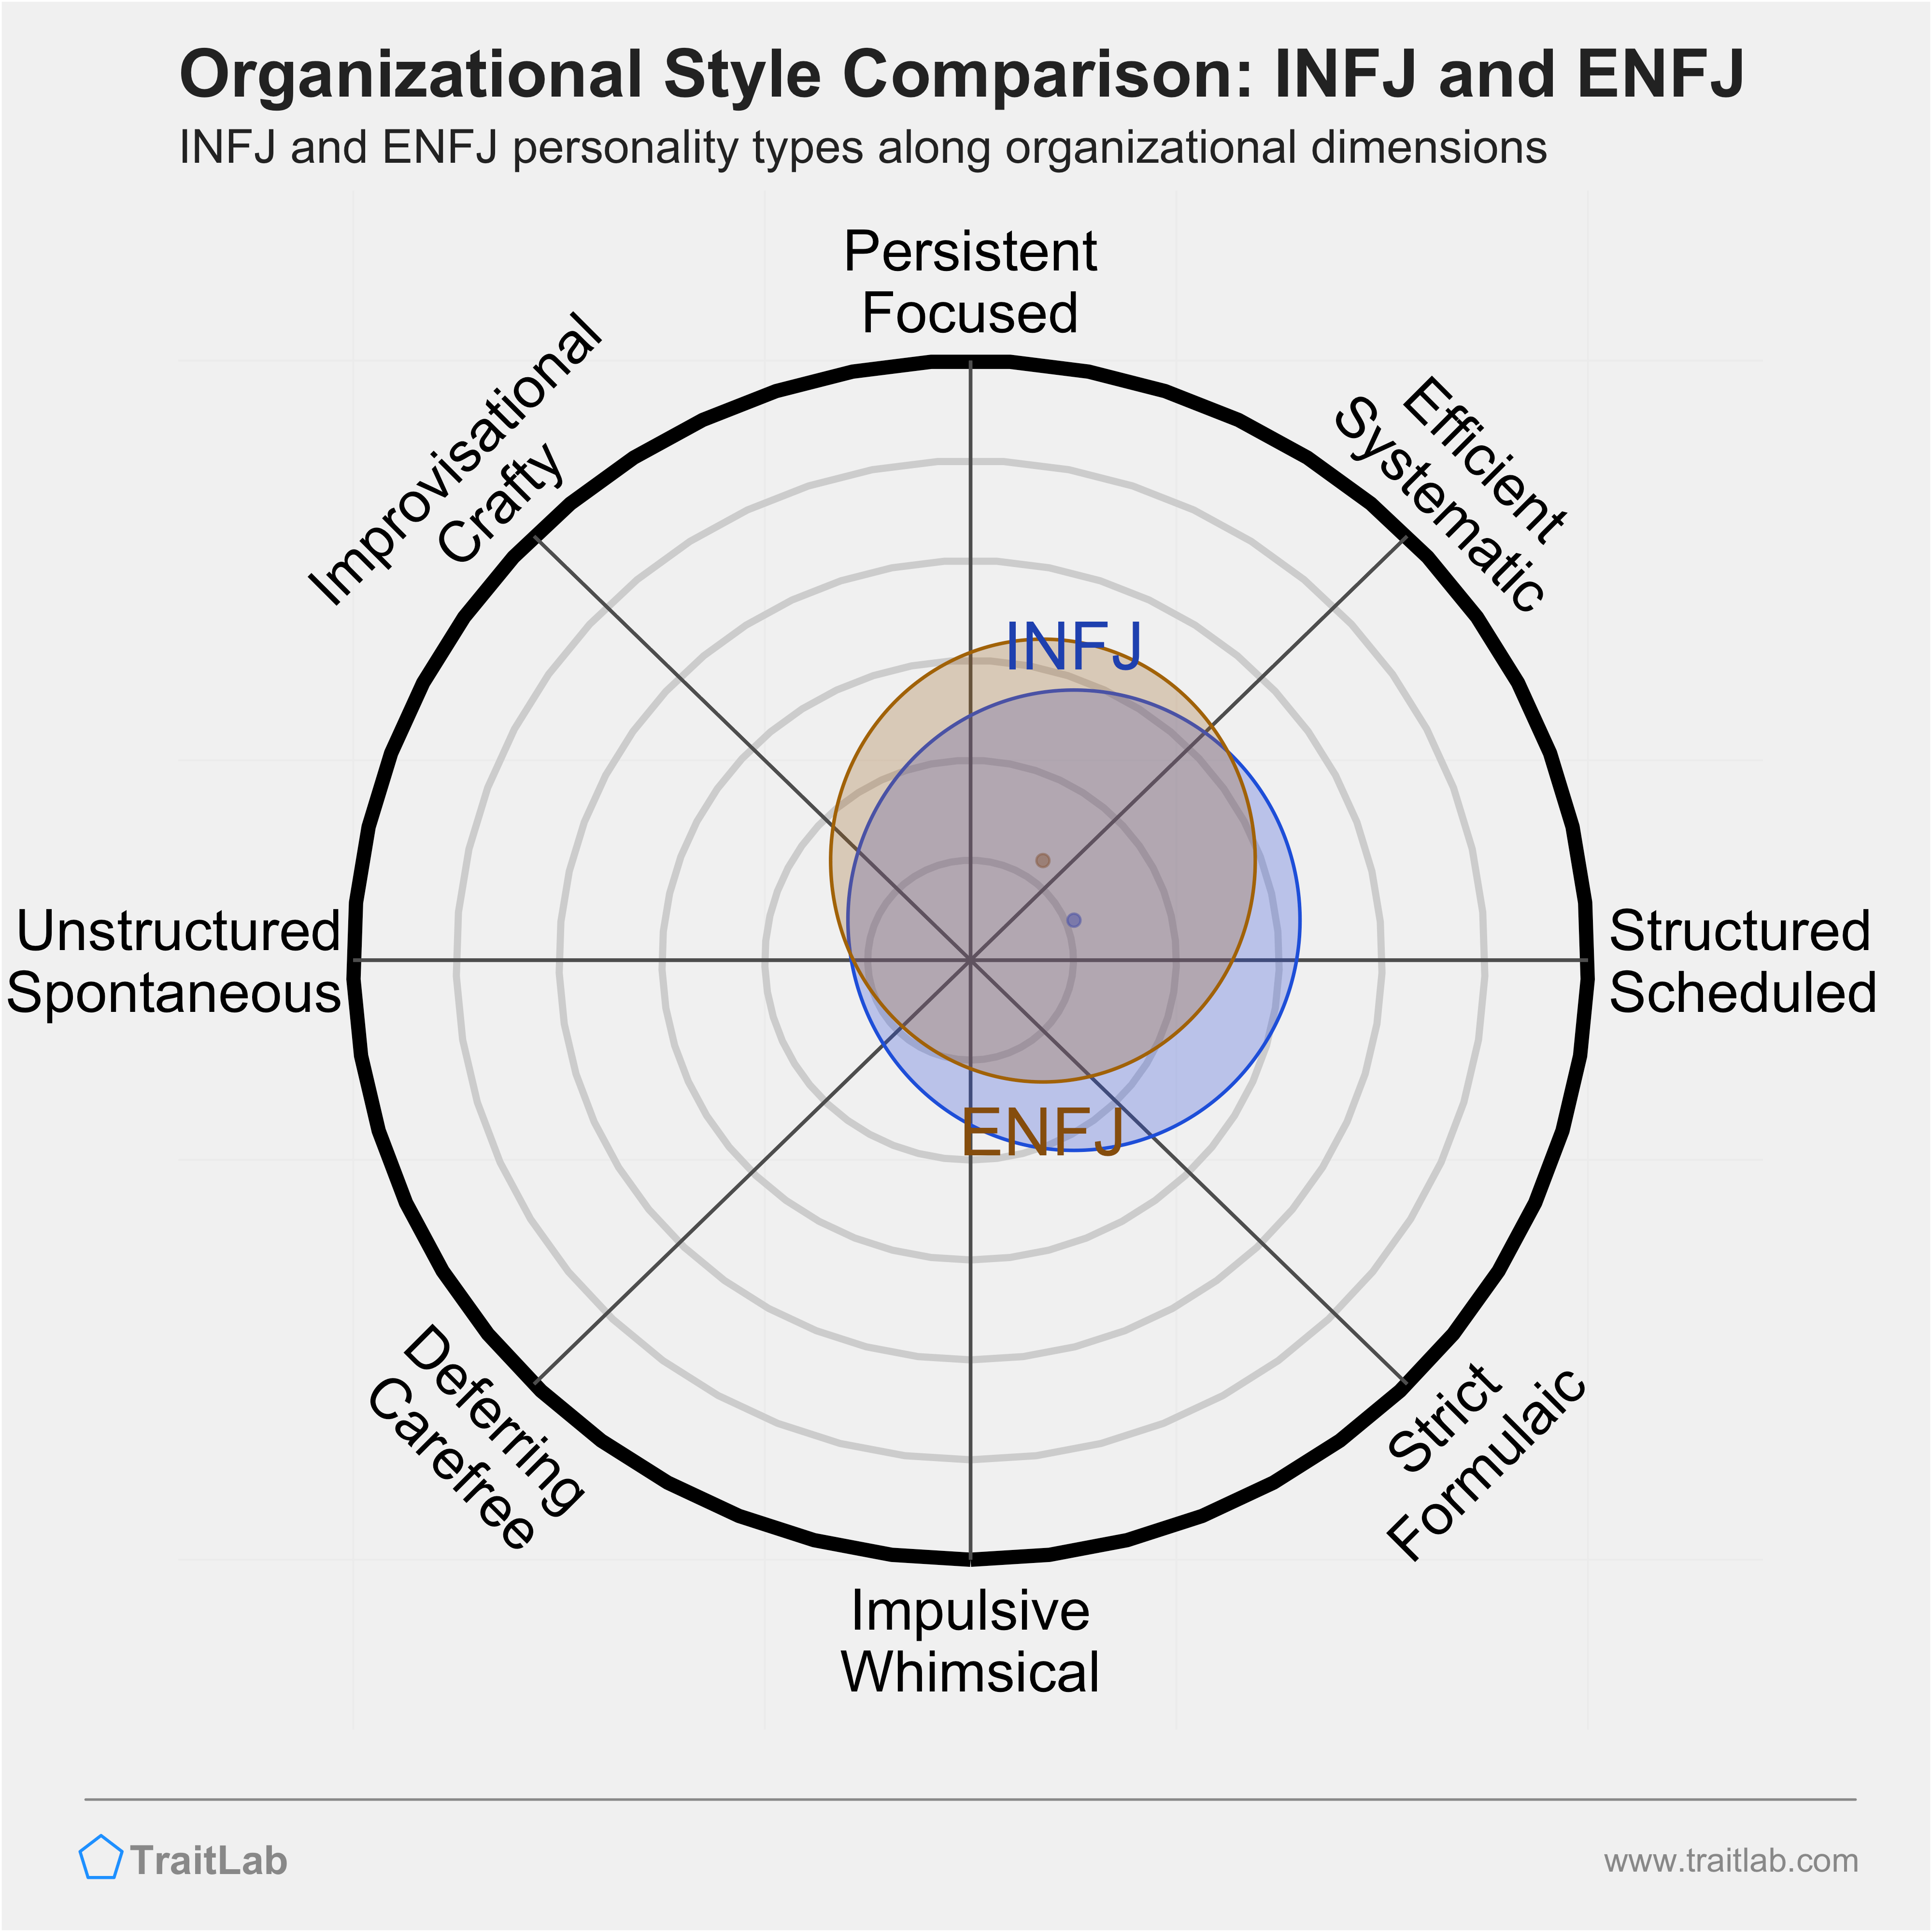 INFJ and ENFJ comparison across organizational dimensions